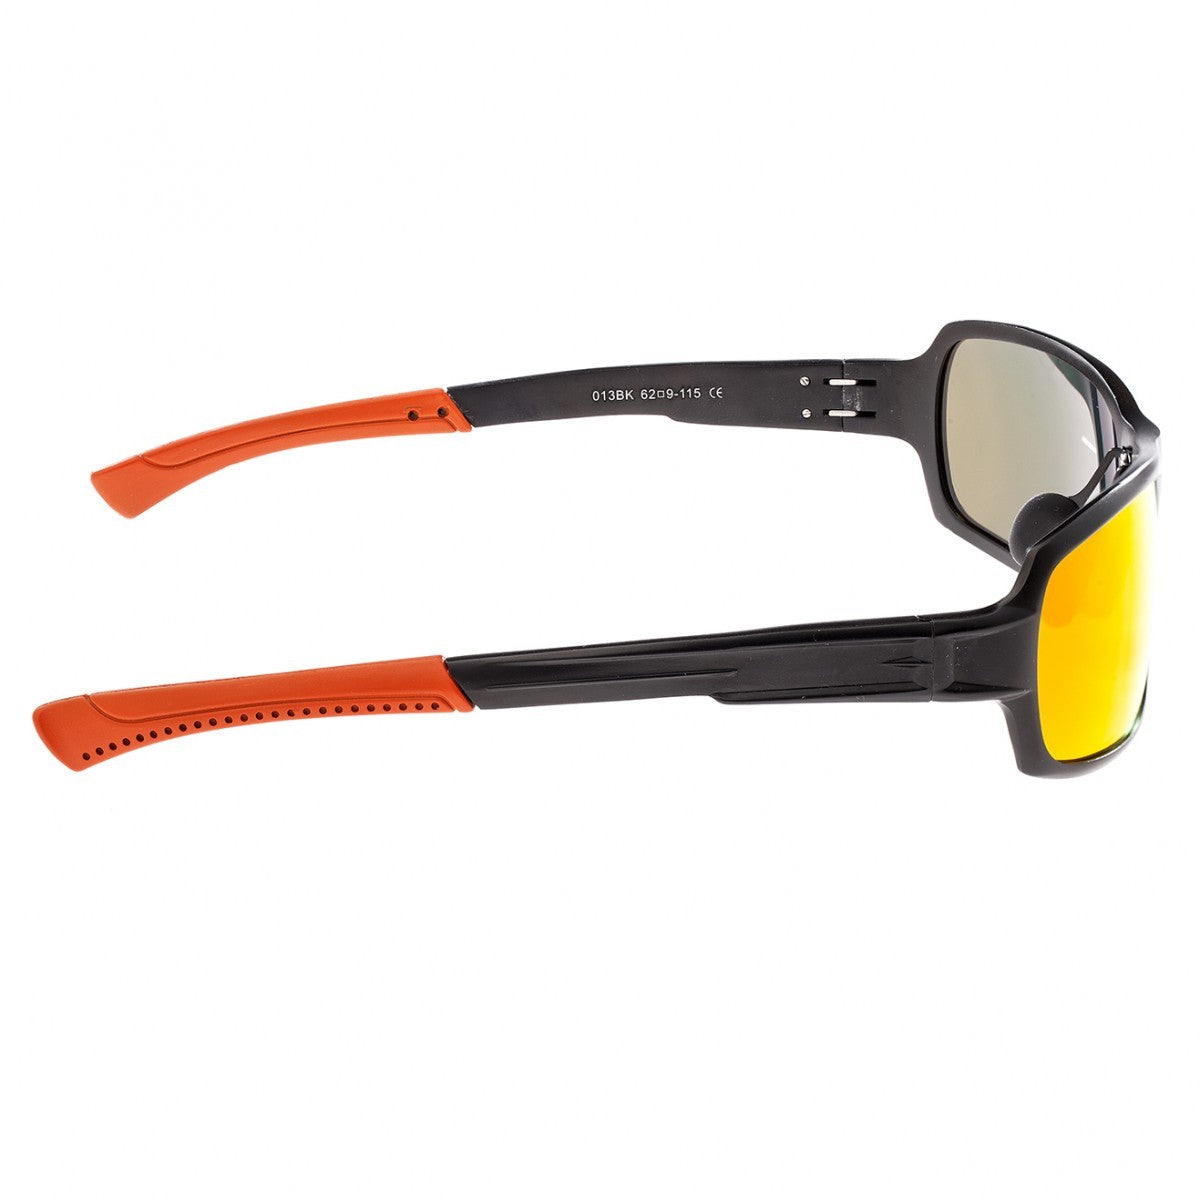 Breed Cosmos Aluminium Polarized Sunglasses - Black/Red-Yellow - BSG013BK